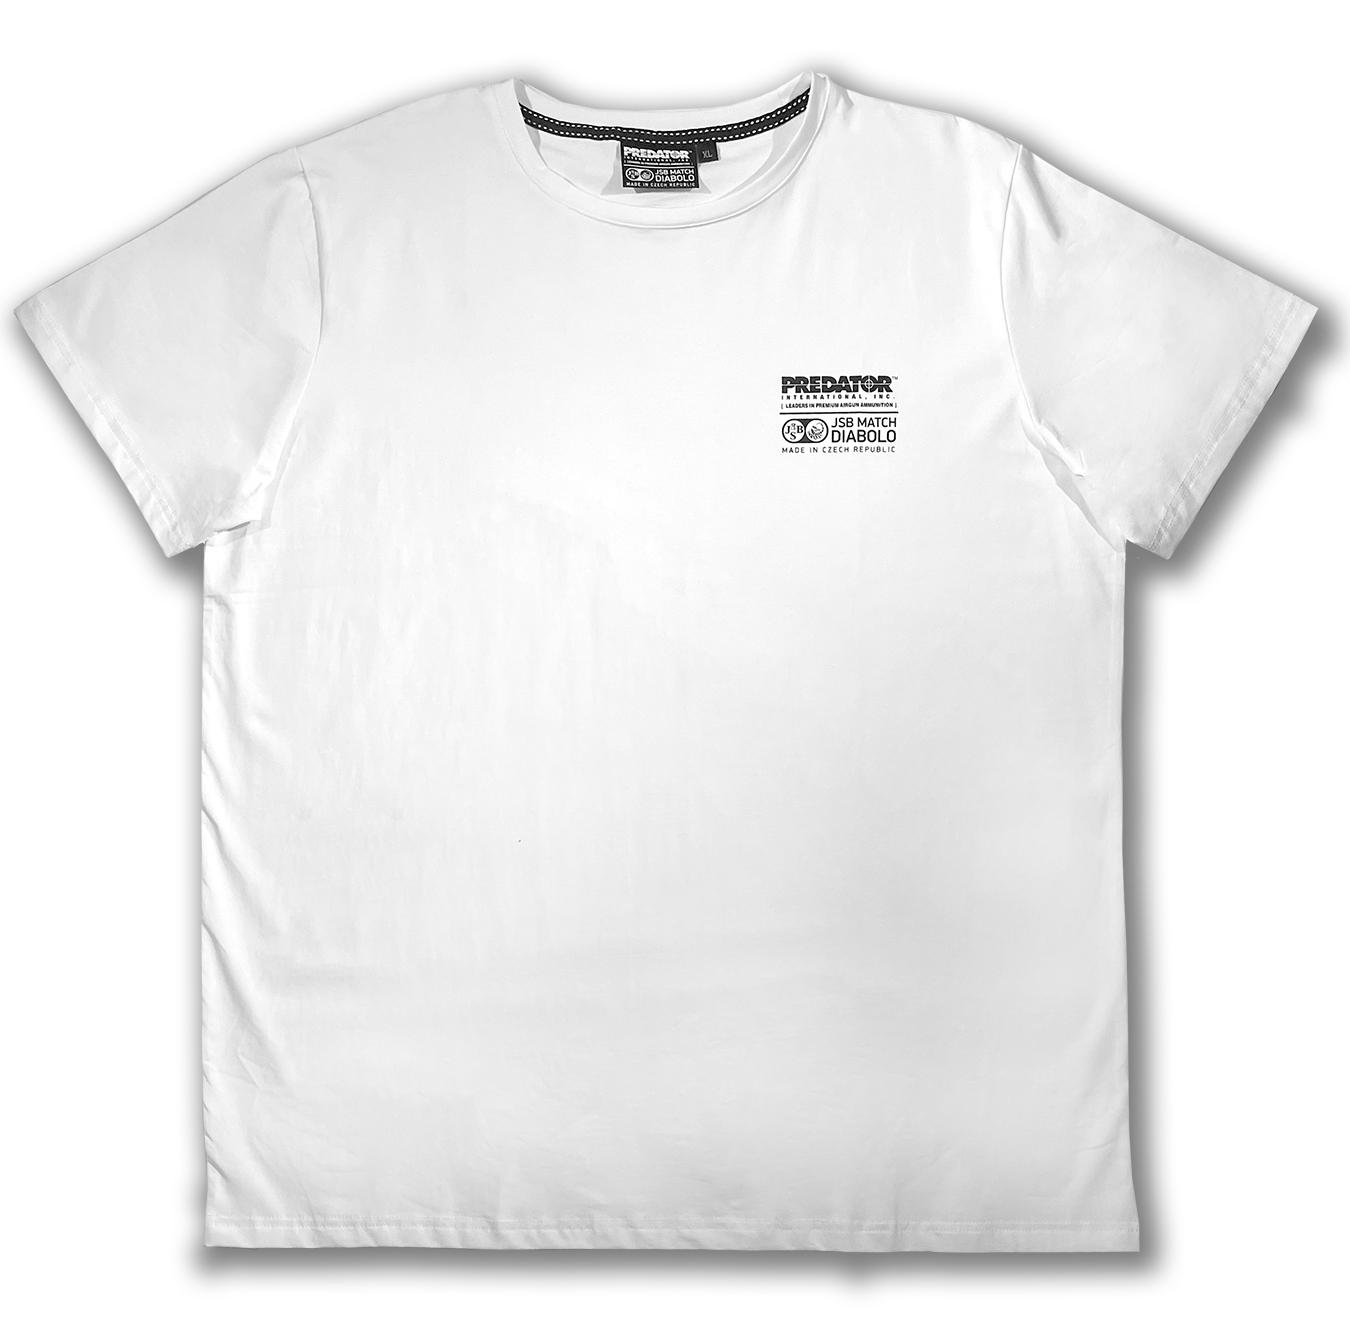 JSB Predator Short Sleeve Cotton/Spandex T-Shirt, White, Large